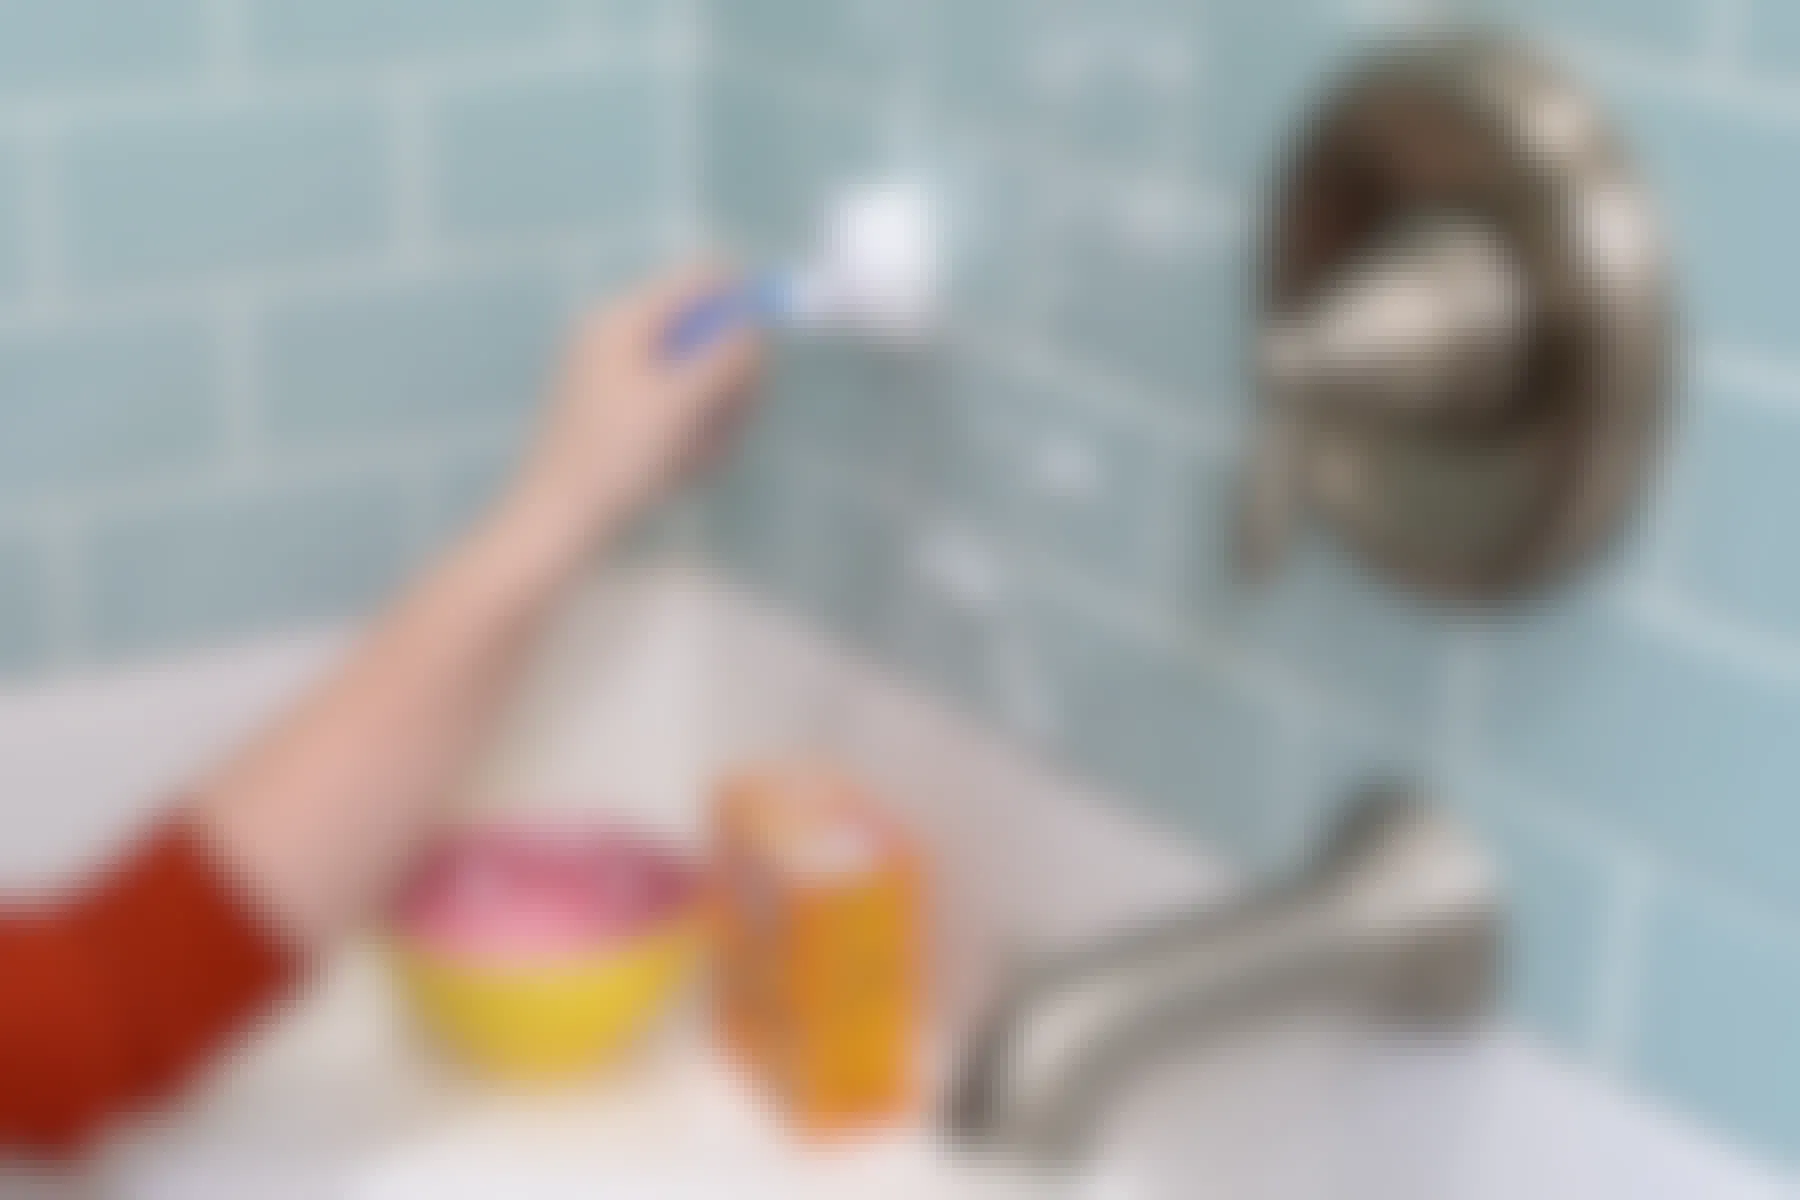 A person scrubbing bathtub tile with baking soda.